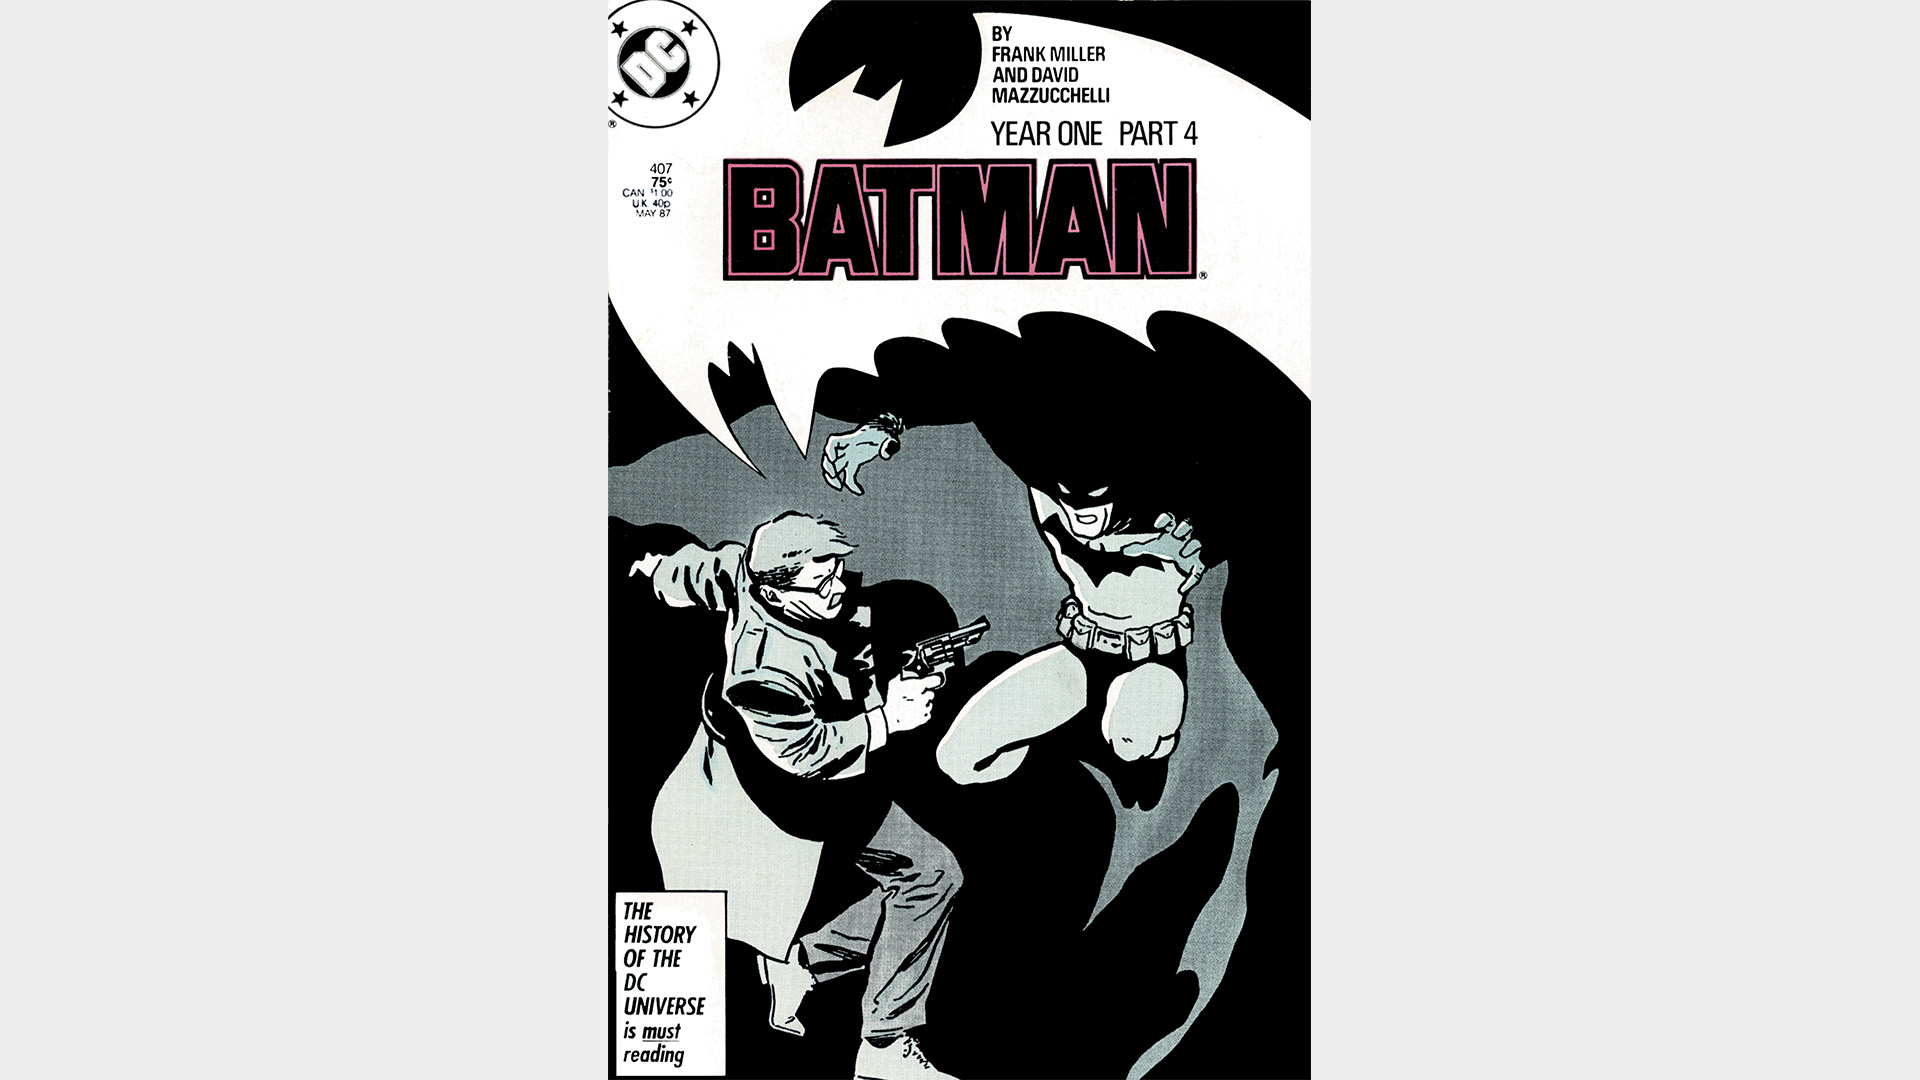 BATMAN #407 EDITION FAC-SIMILE